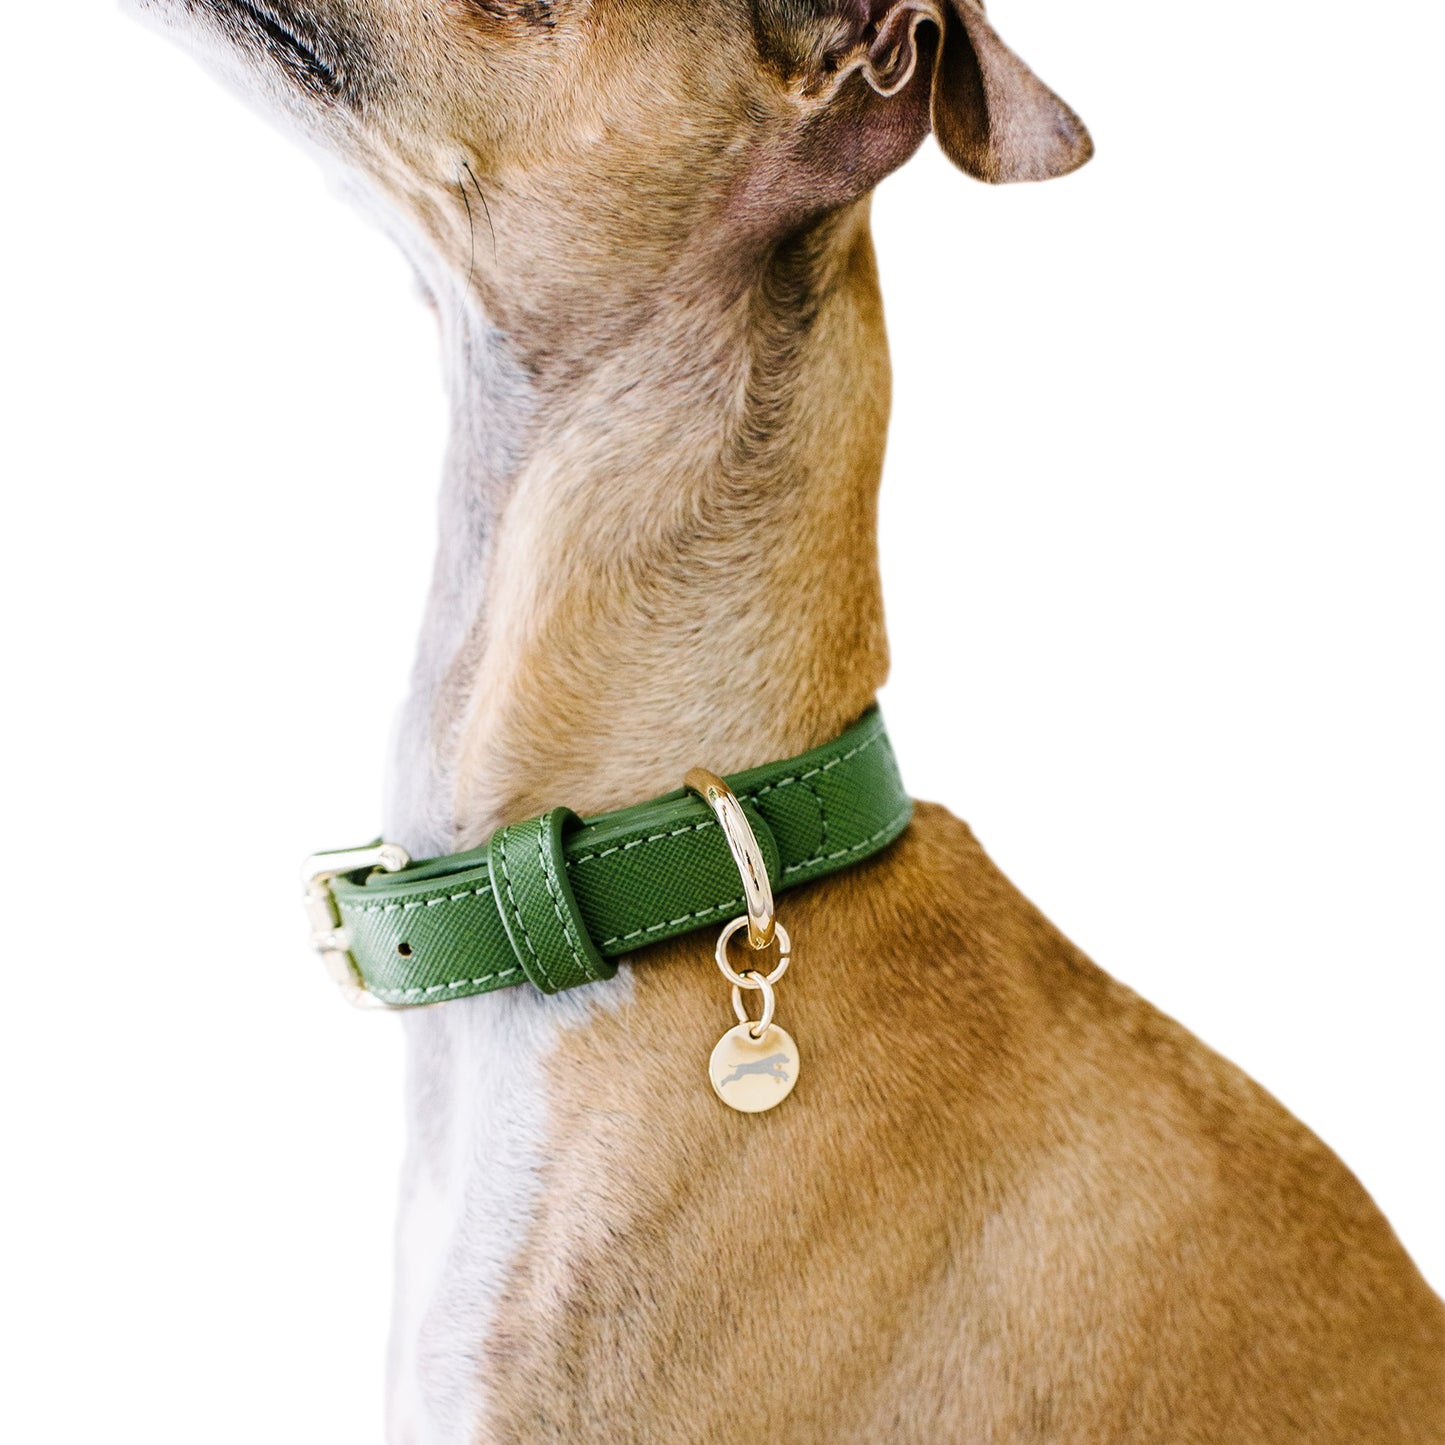 Green Dog Collar - Chasing Winter